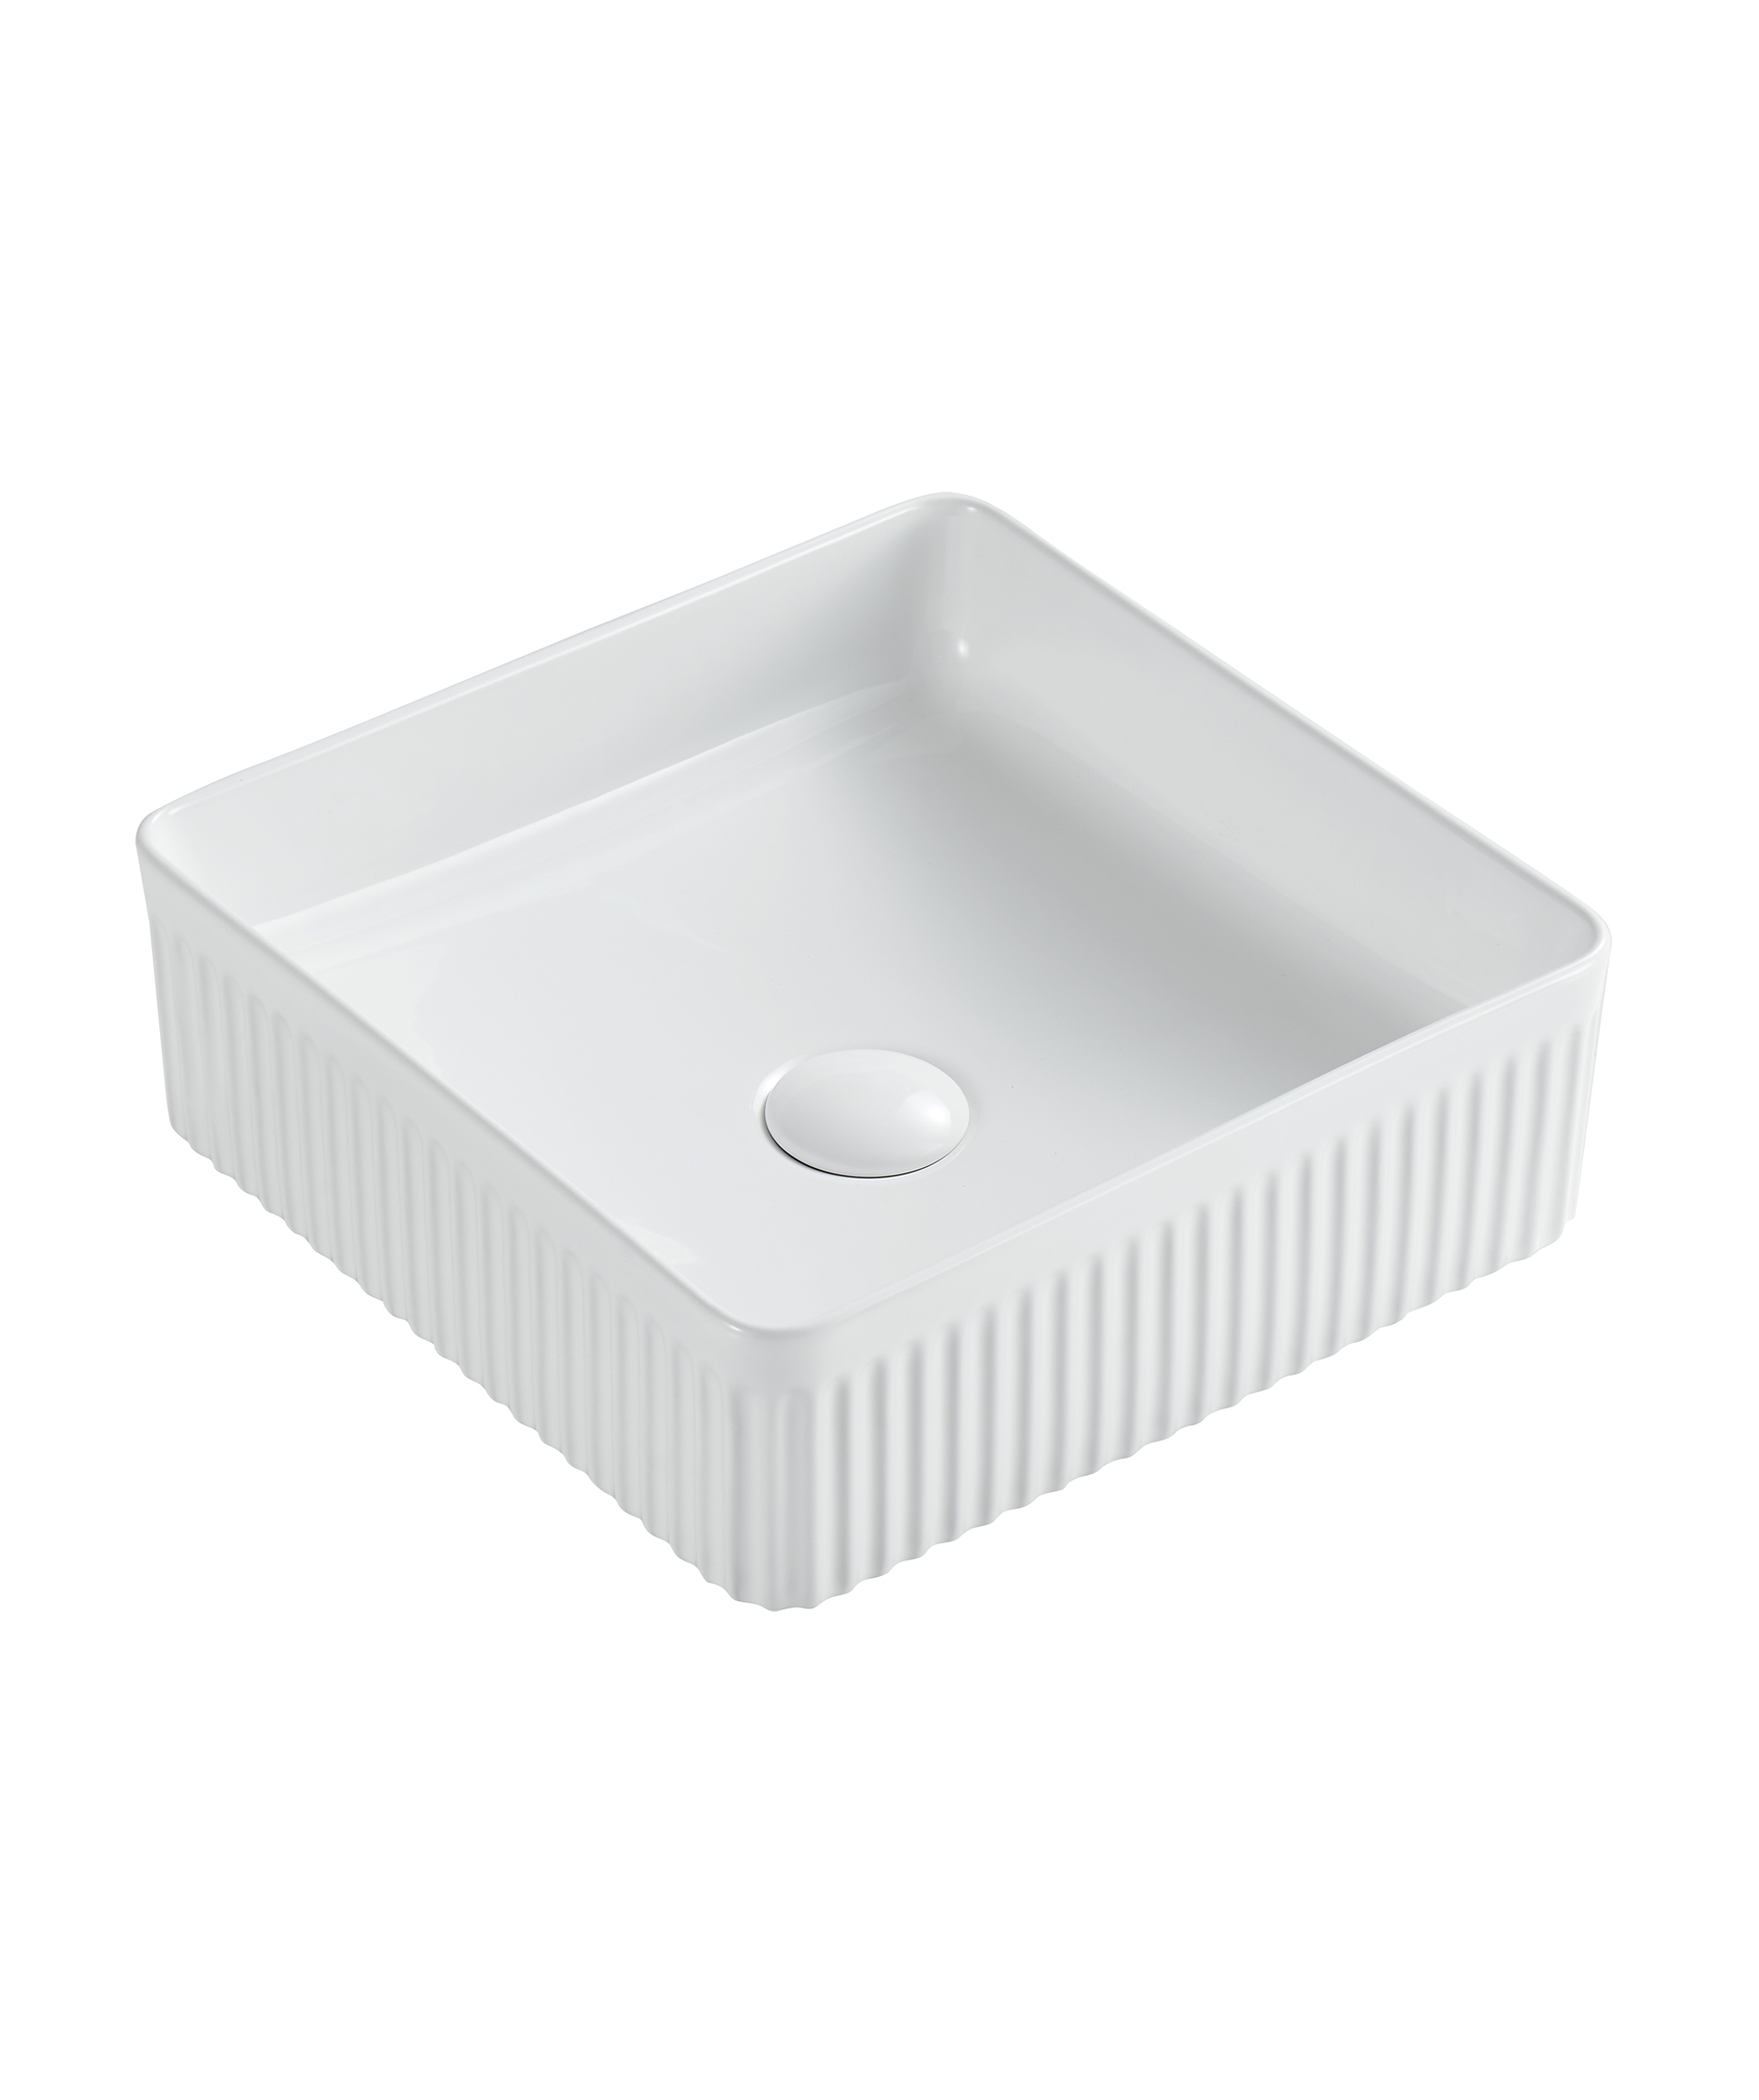 Cleo 365 ceramic basin - White Gloss